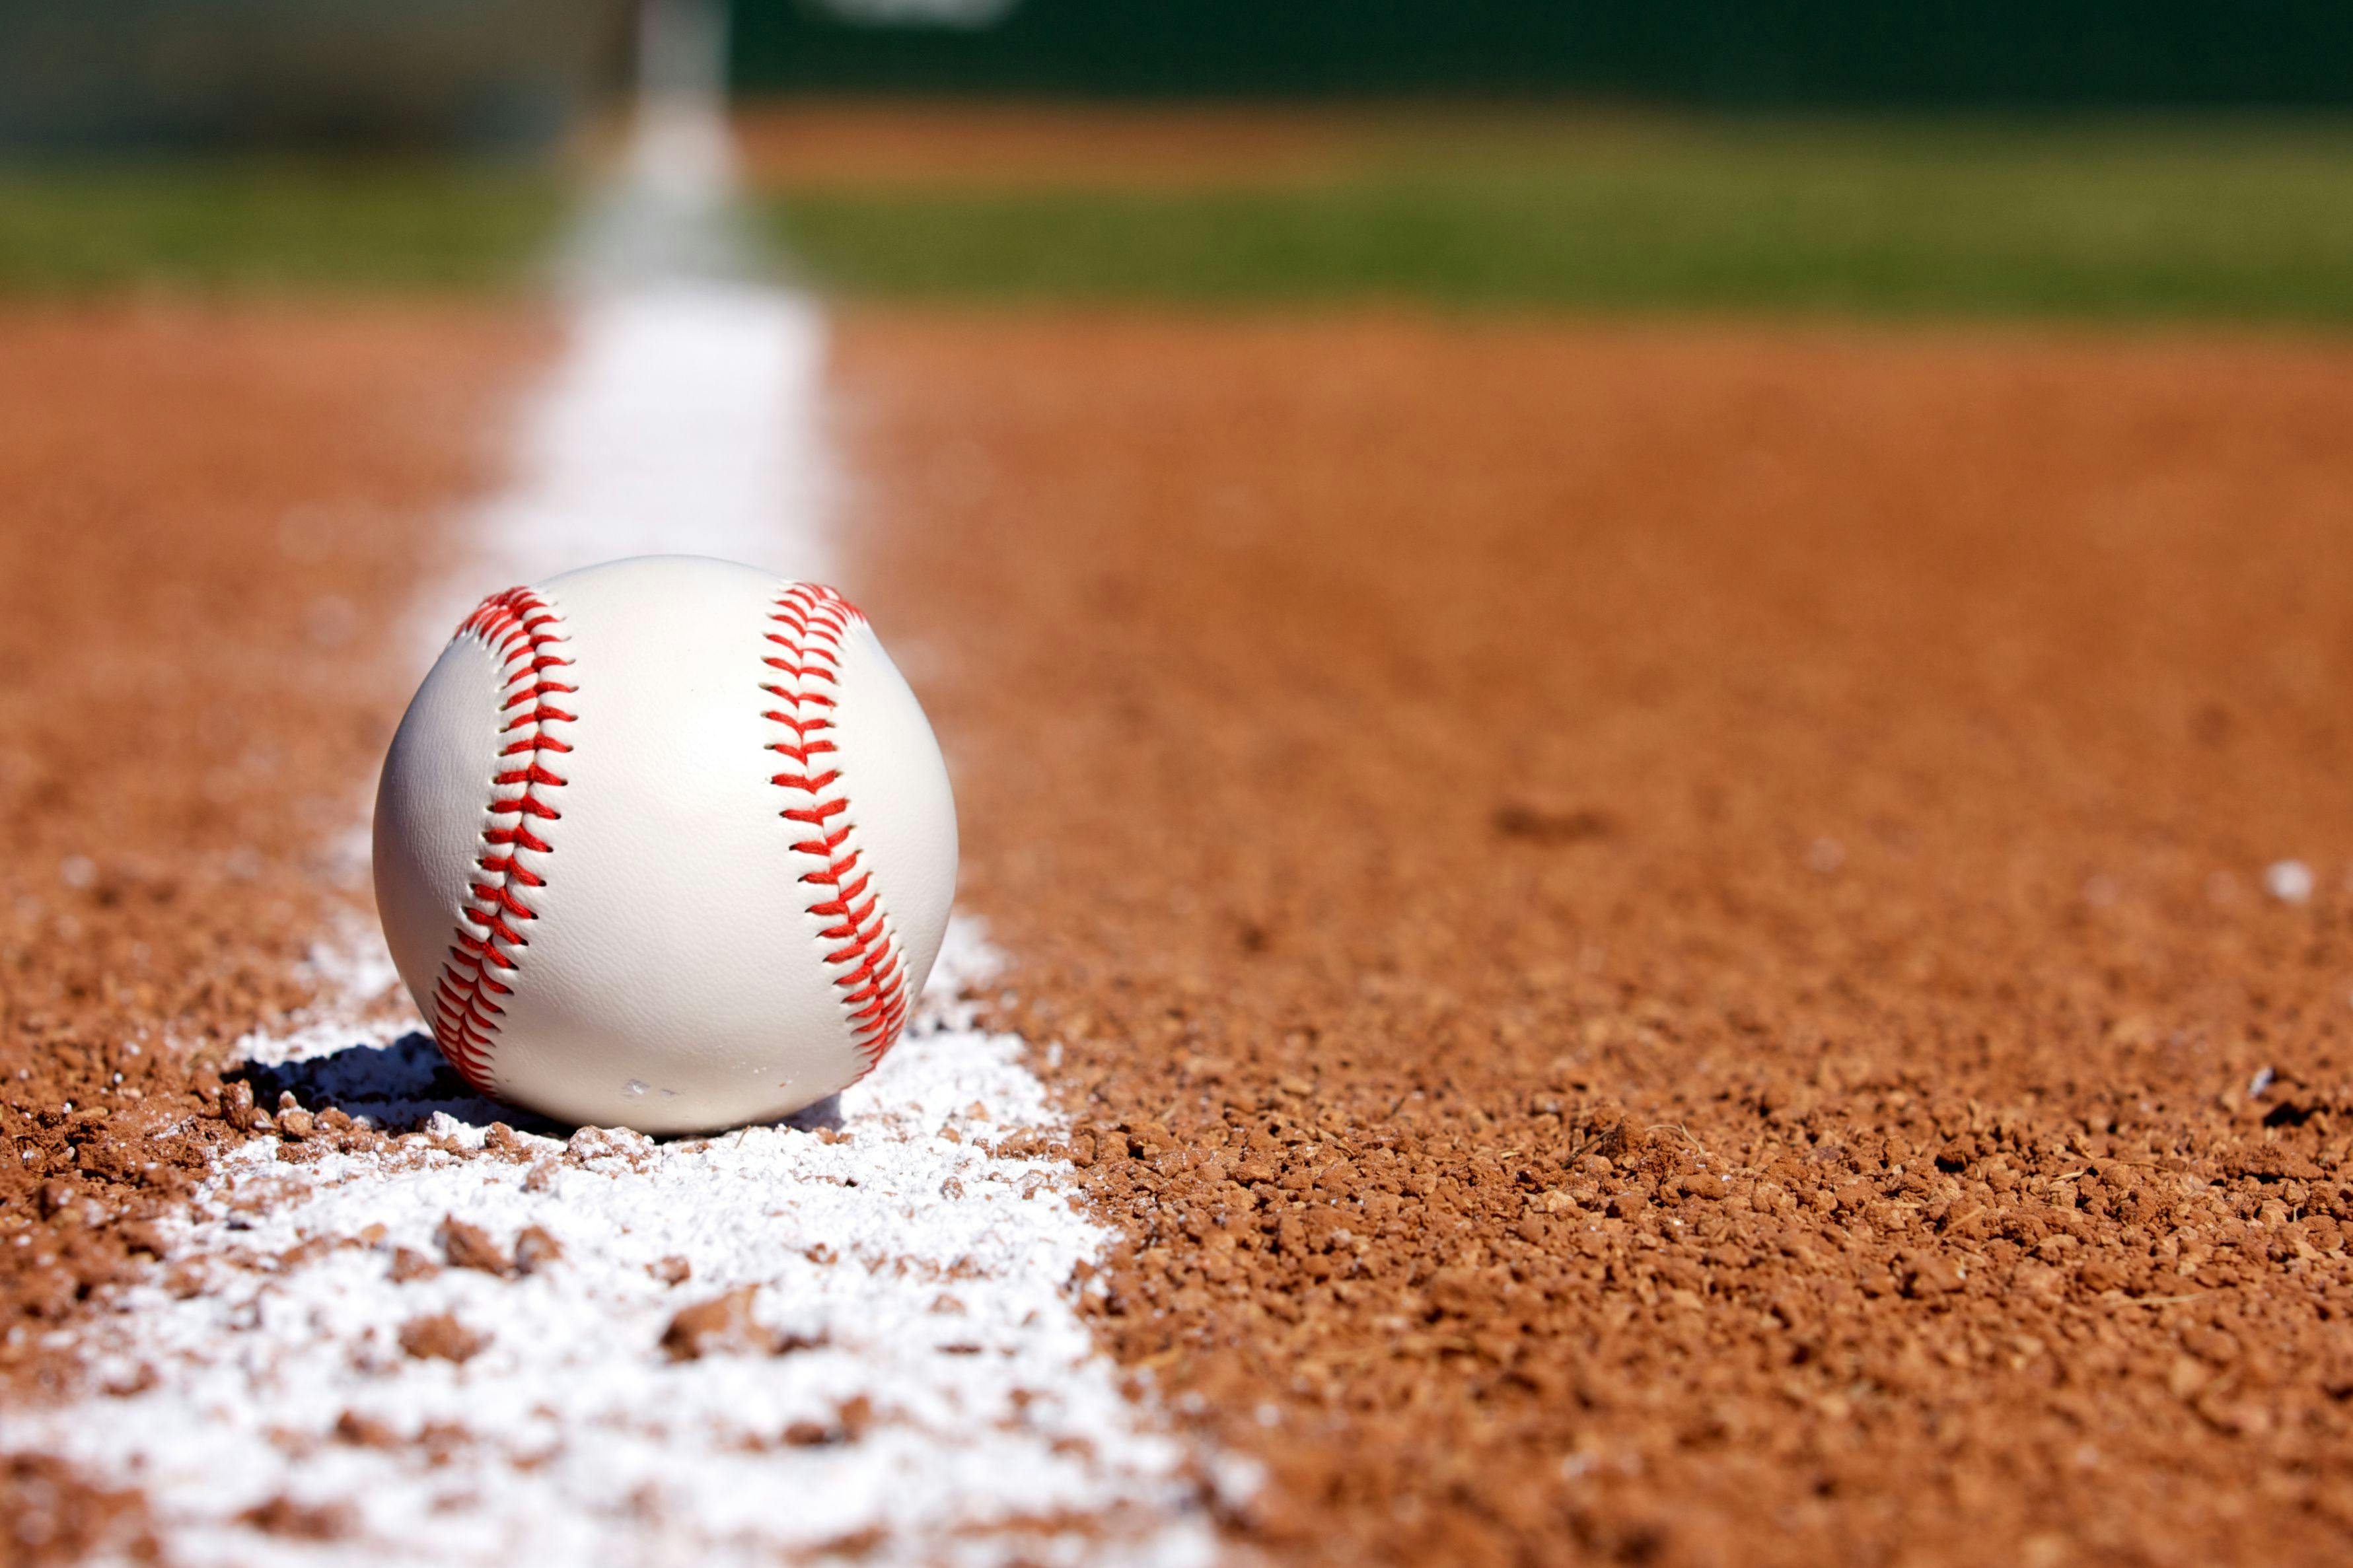 The Positive Psychiatry Baseball Hug of Sportsmanship Seen Around the World